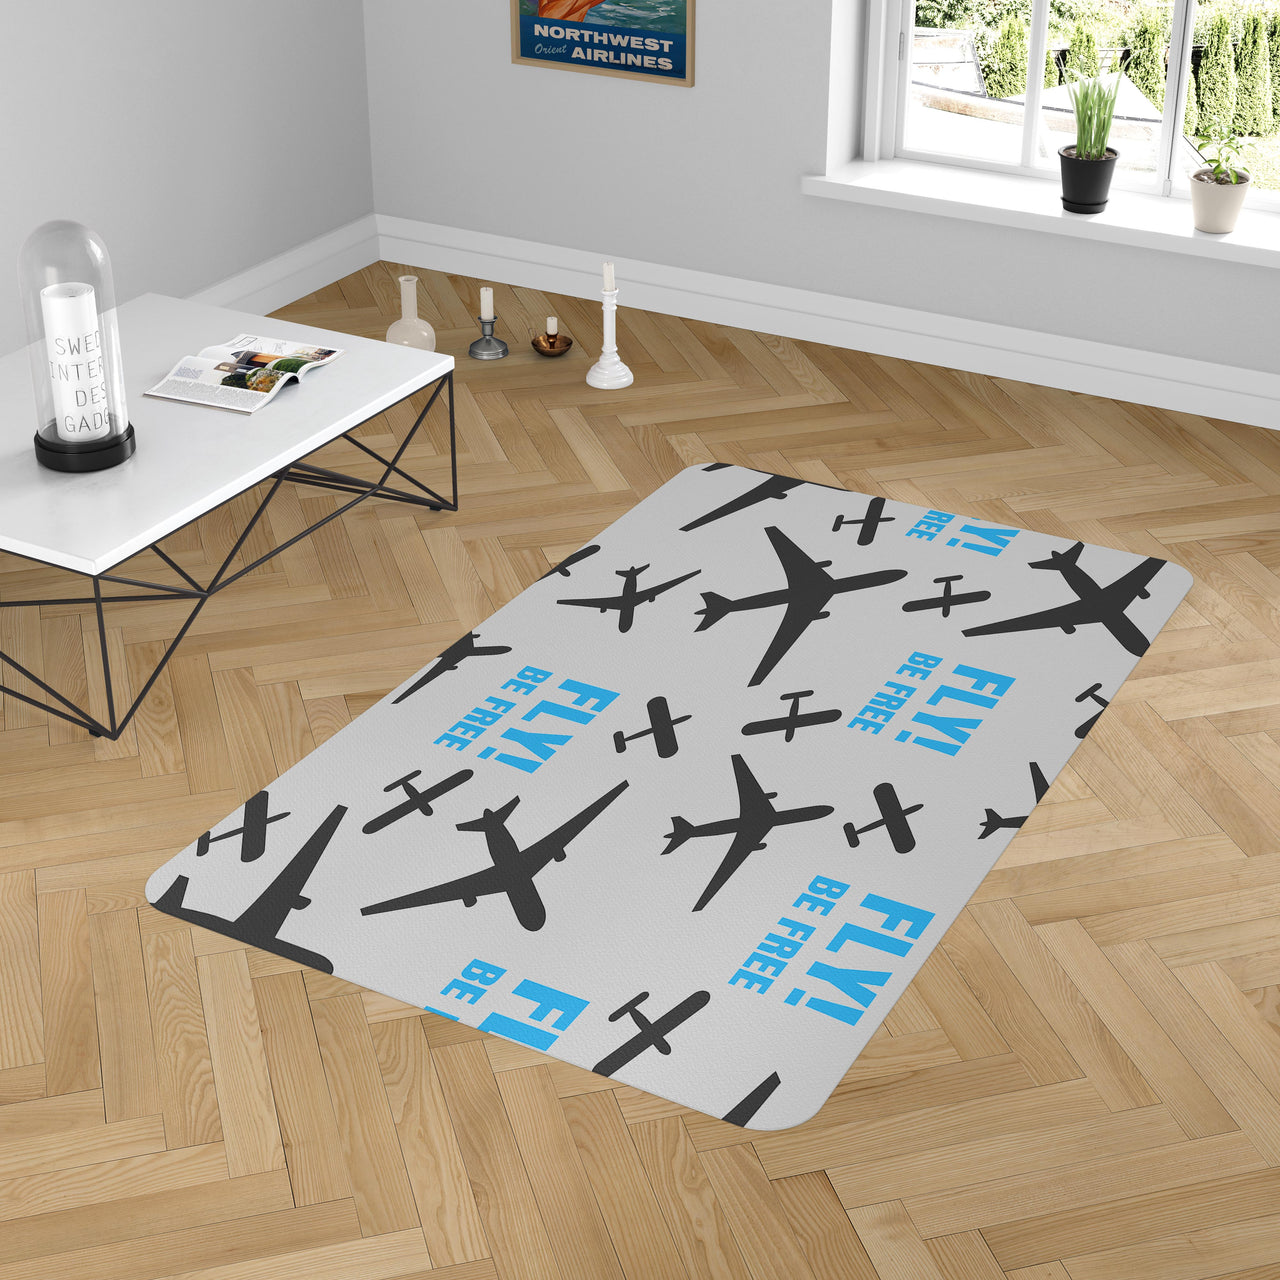 Fly Be Free (Gray) Designed Carpet & Floor Mats